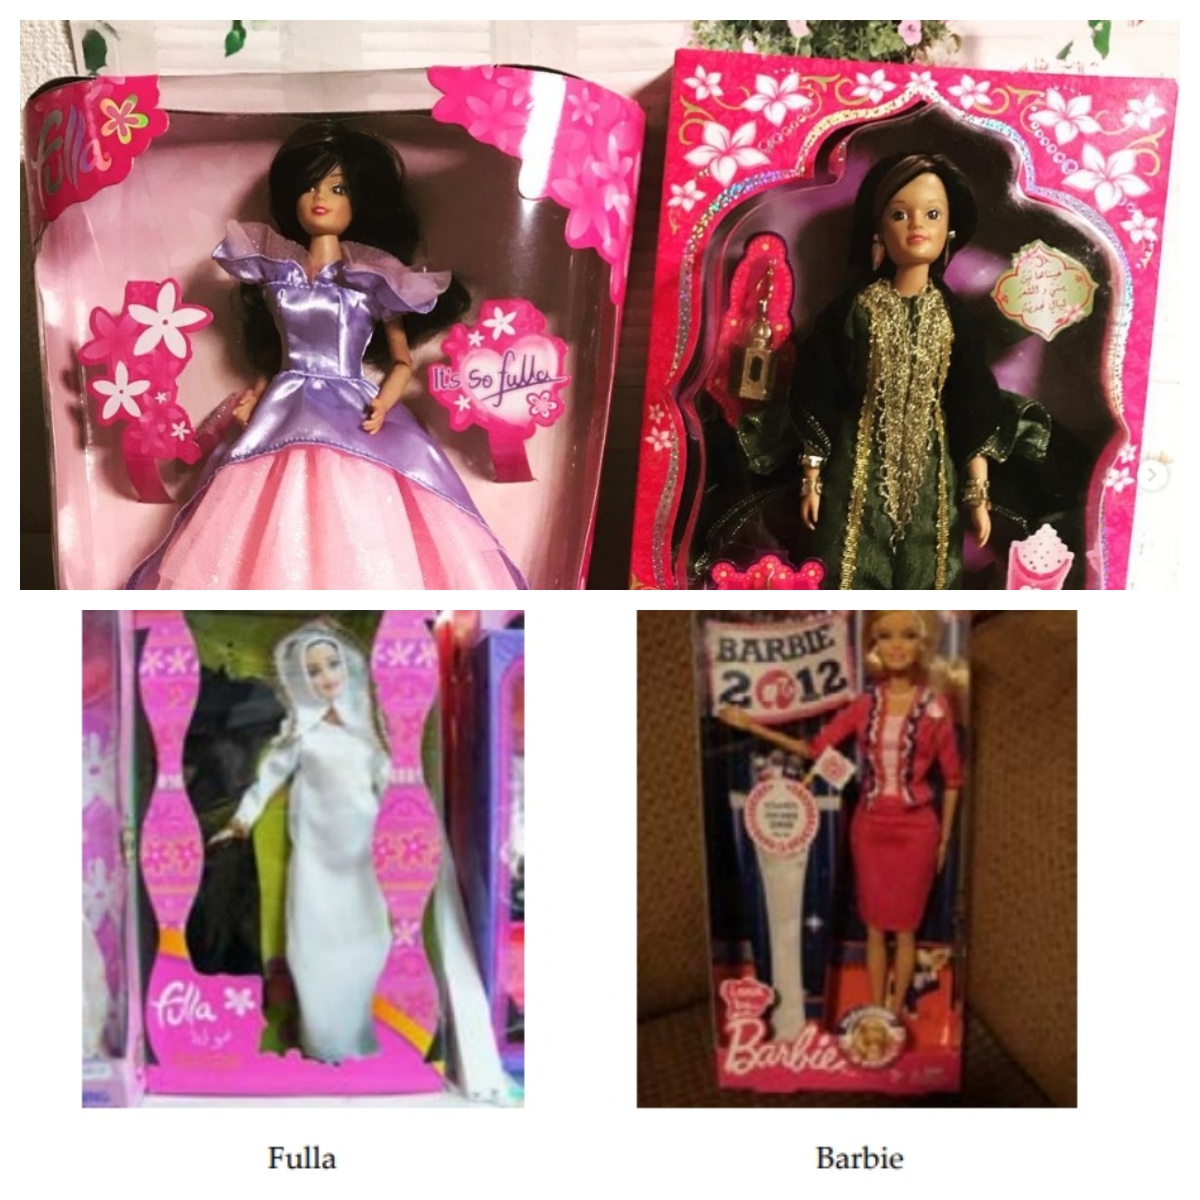 Fulla doll vs Barbie doll